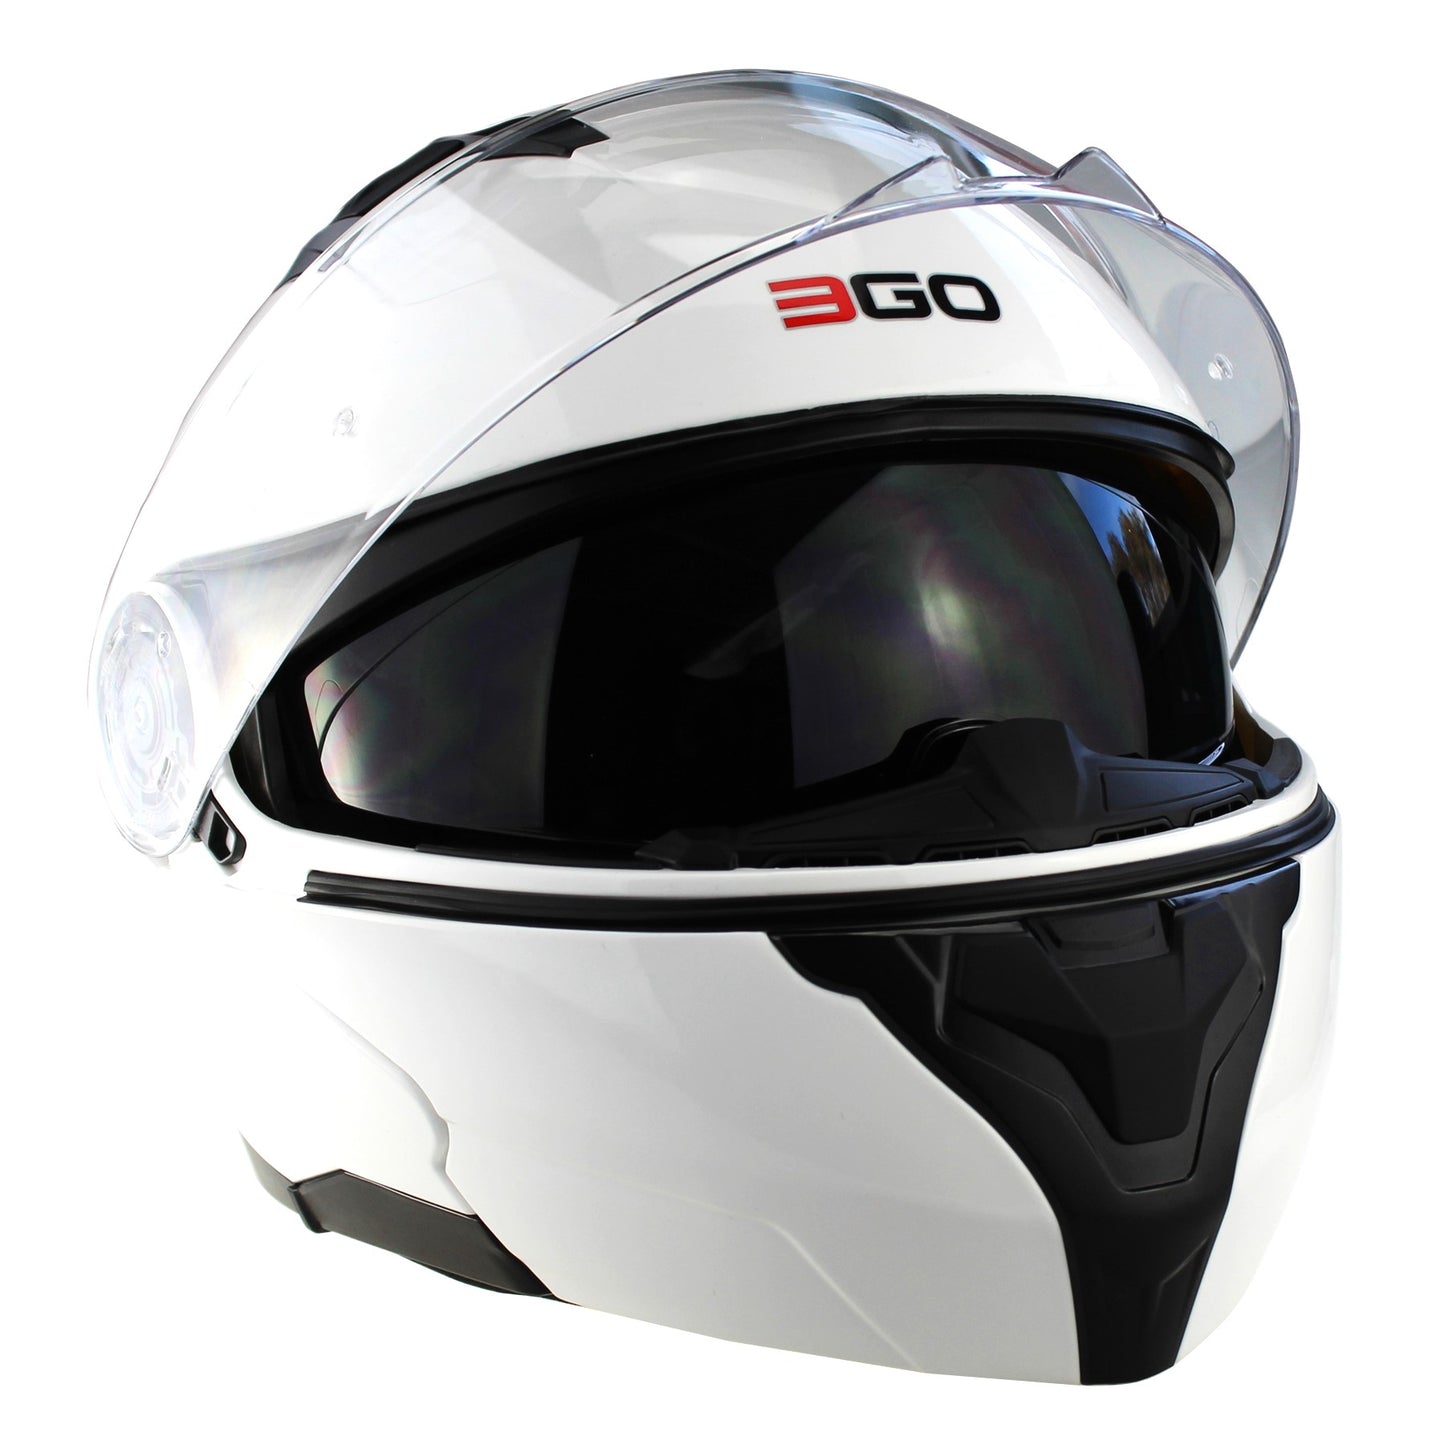 Riderwear | 3GO E335 Flip-Up Modular Helmet - White